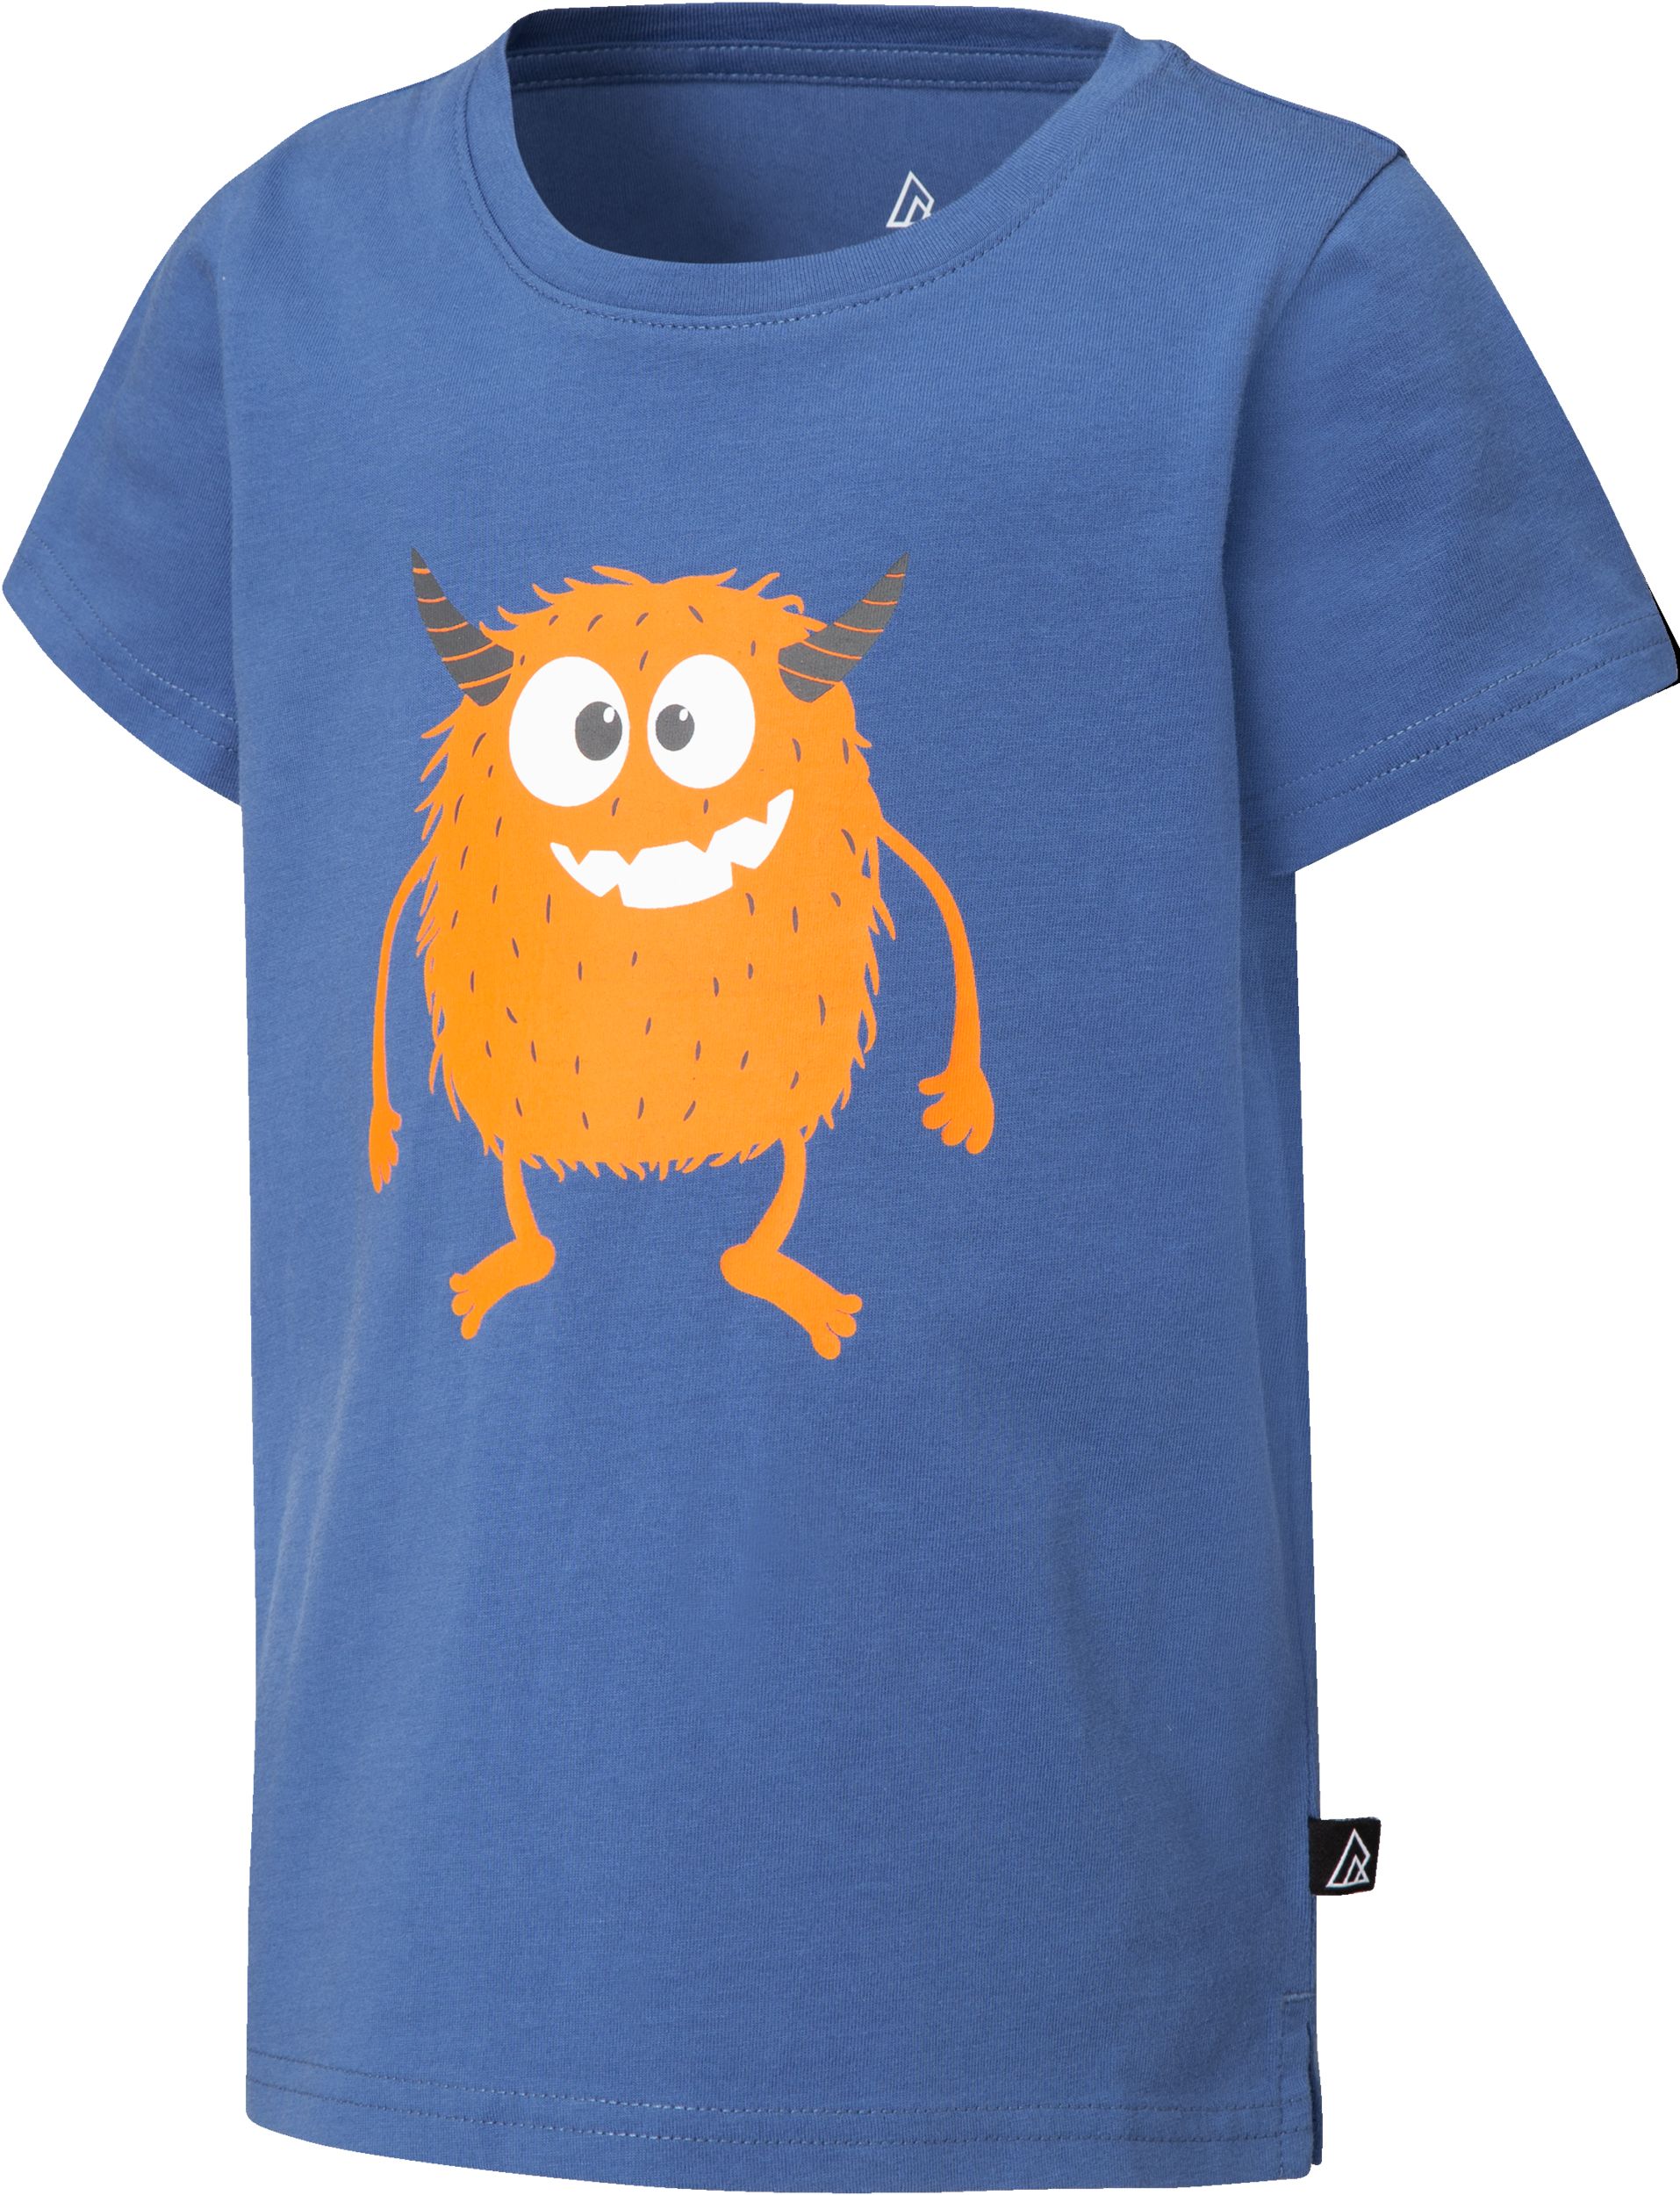 Ripzone Toddler Boys’ 2-6 Carsten Graphic T Shirt